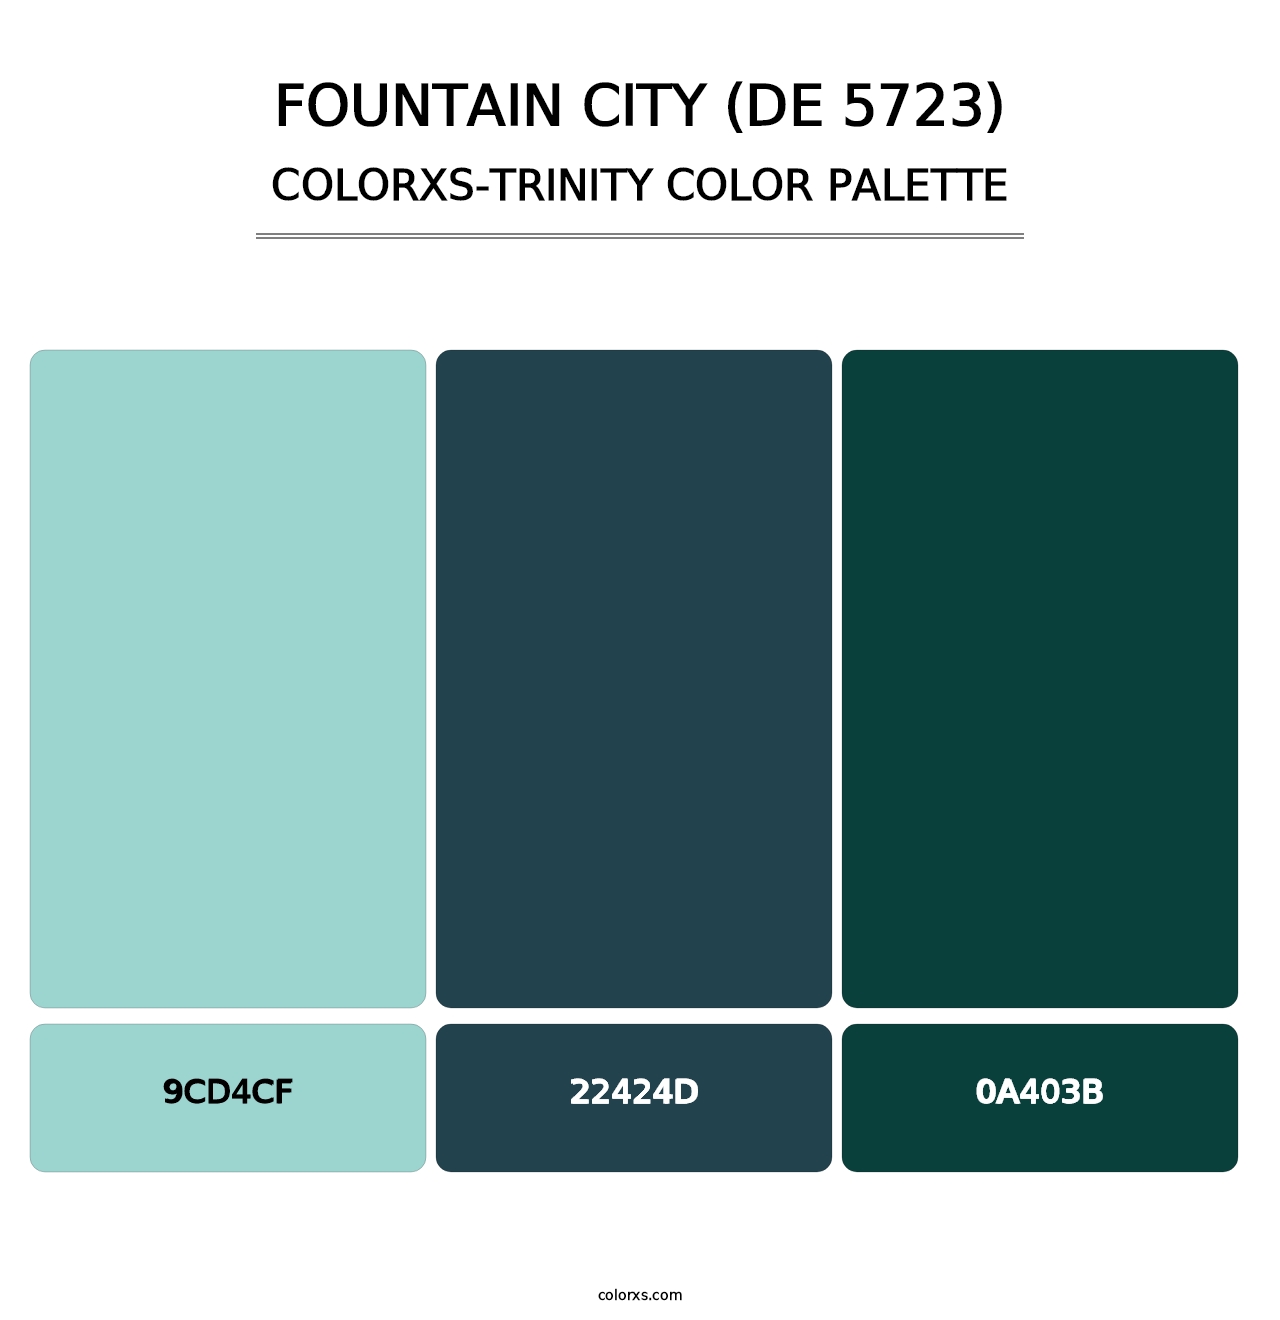 Fountain City (DE 5723) - Colorxs Trinity Palette